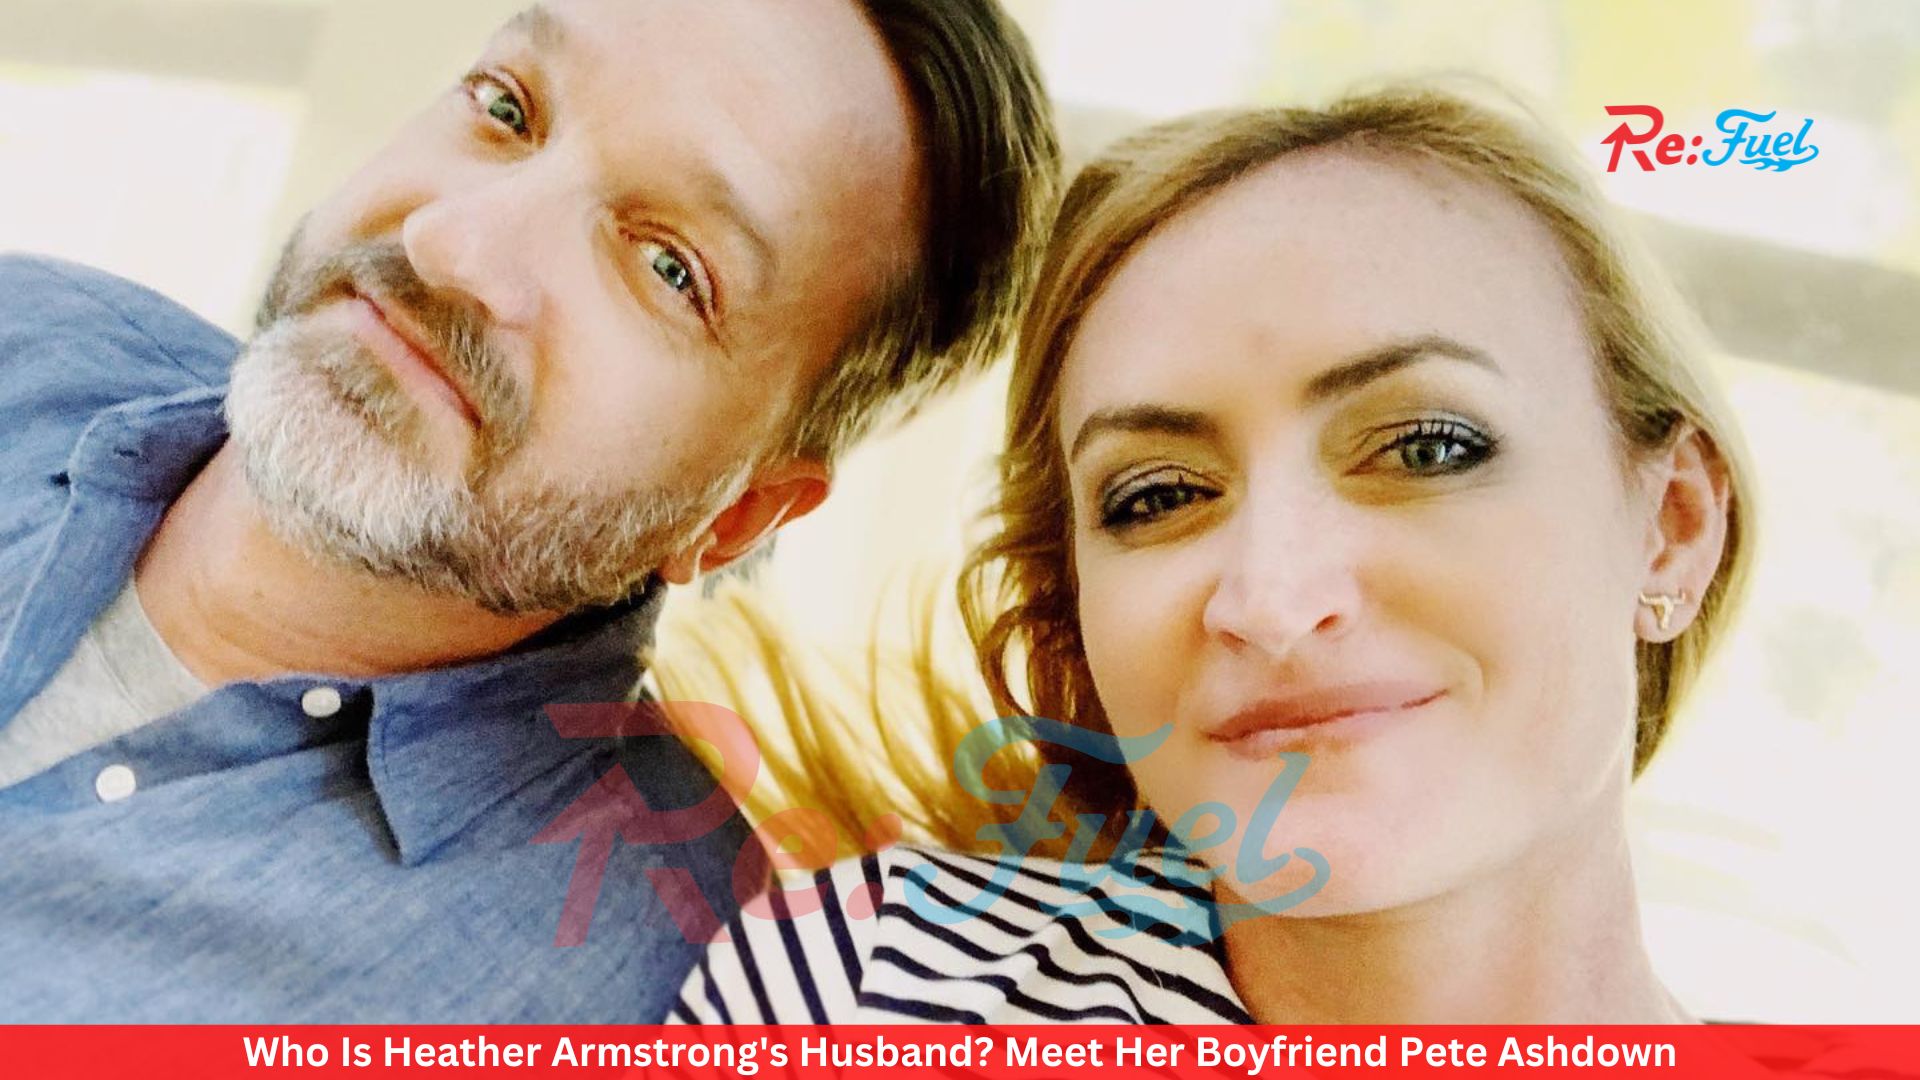 Who Is Heather Armstrong's Husband? Meet Her Boyfriend Pete Ashdown